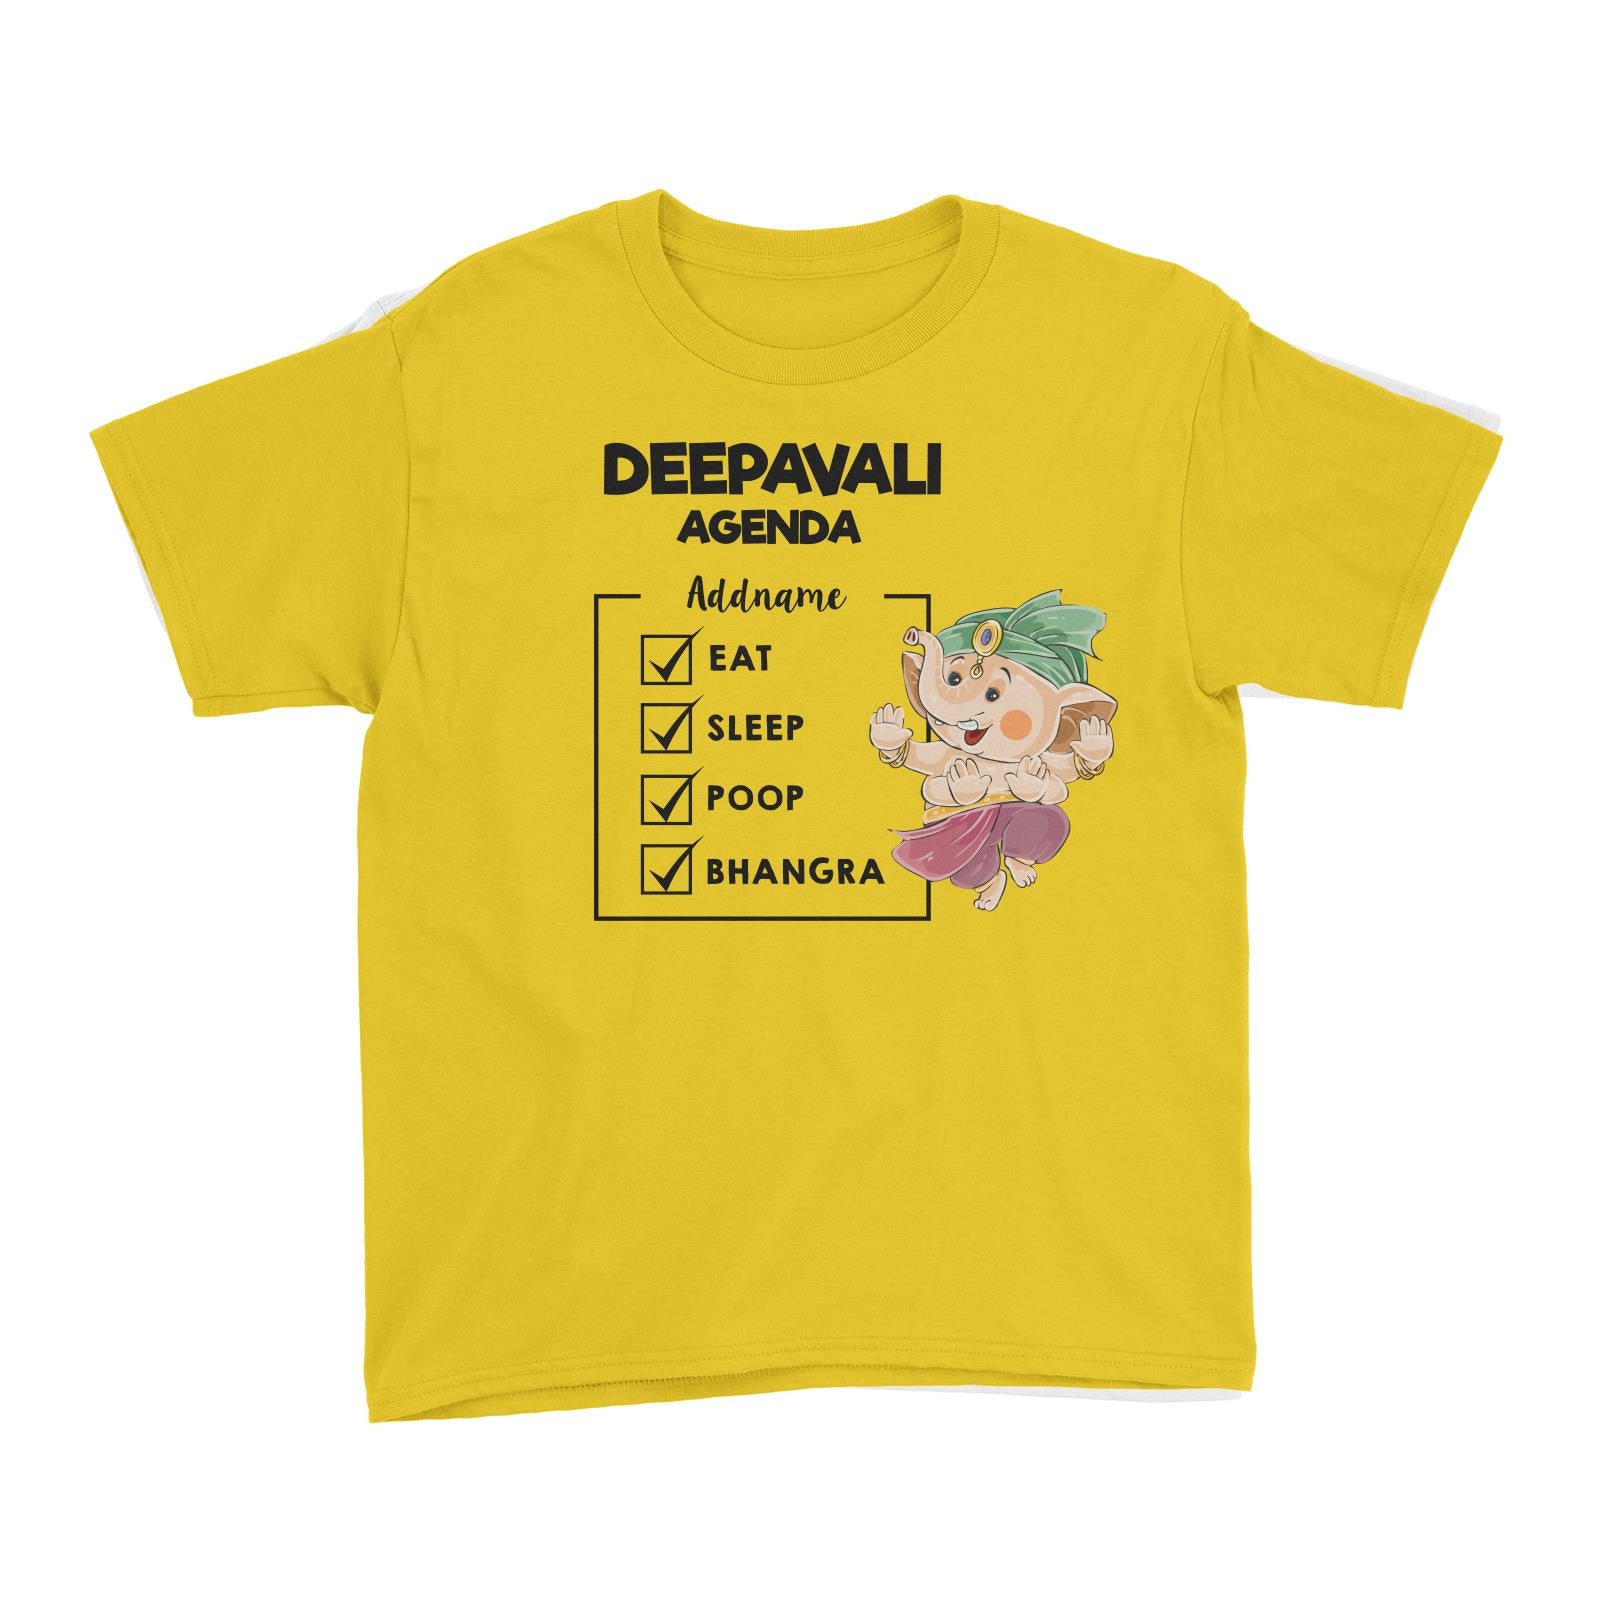 Cute Ganesha Dancing Bhangra Addname Deepavali Agenda Kid's T-Shirt